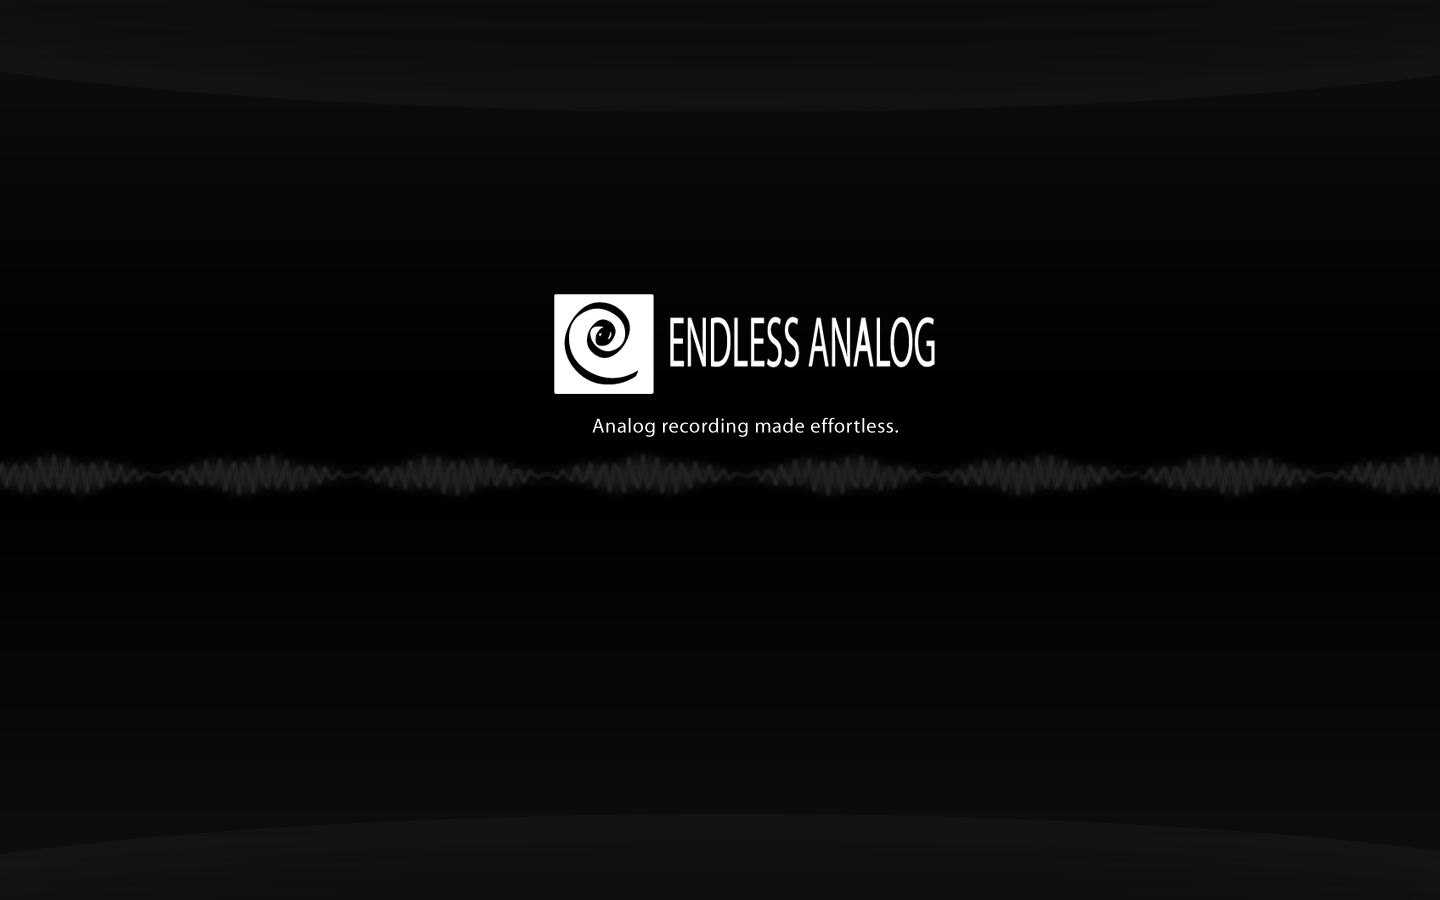 ENDLESS ANALOG WALLPAPERS « Endless Analog